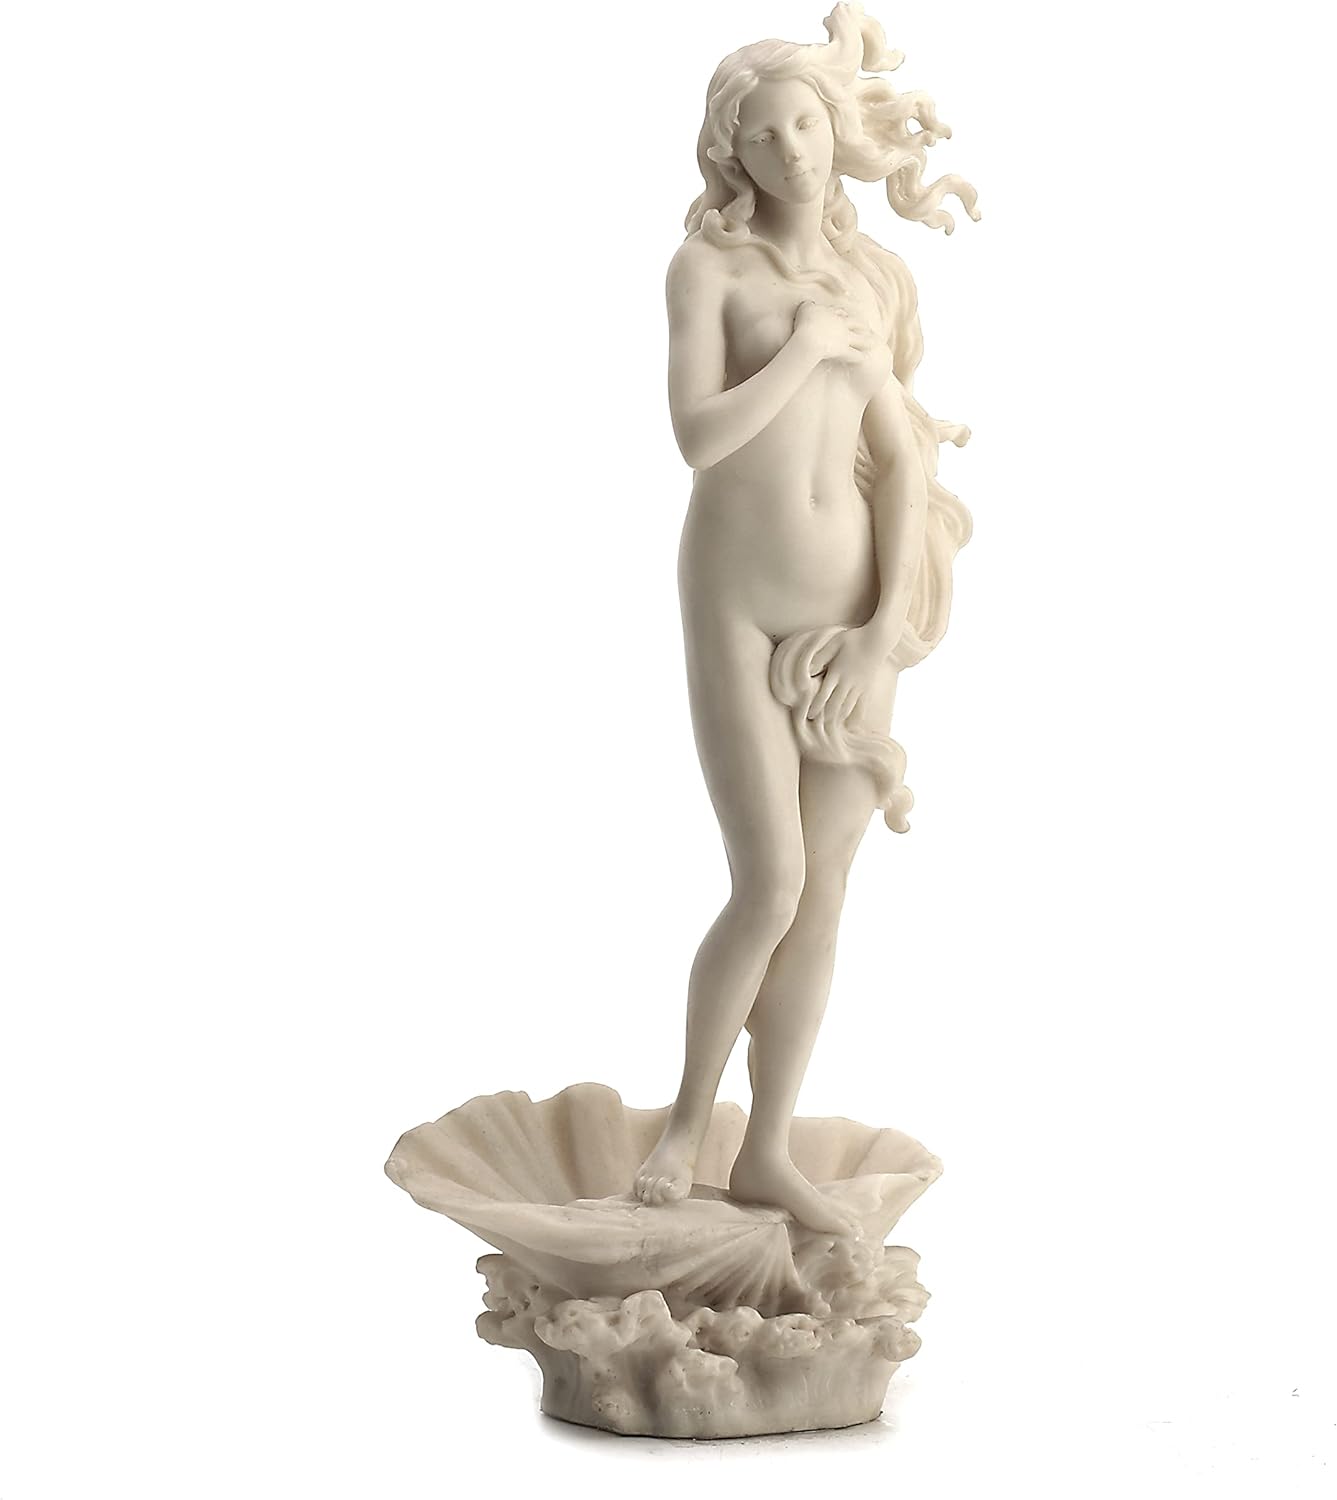  The Birth of Venus by Sandro Botticelli Marble Finish 11" Statue